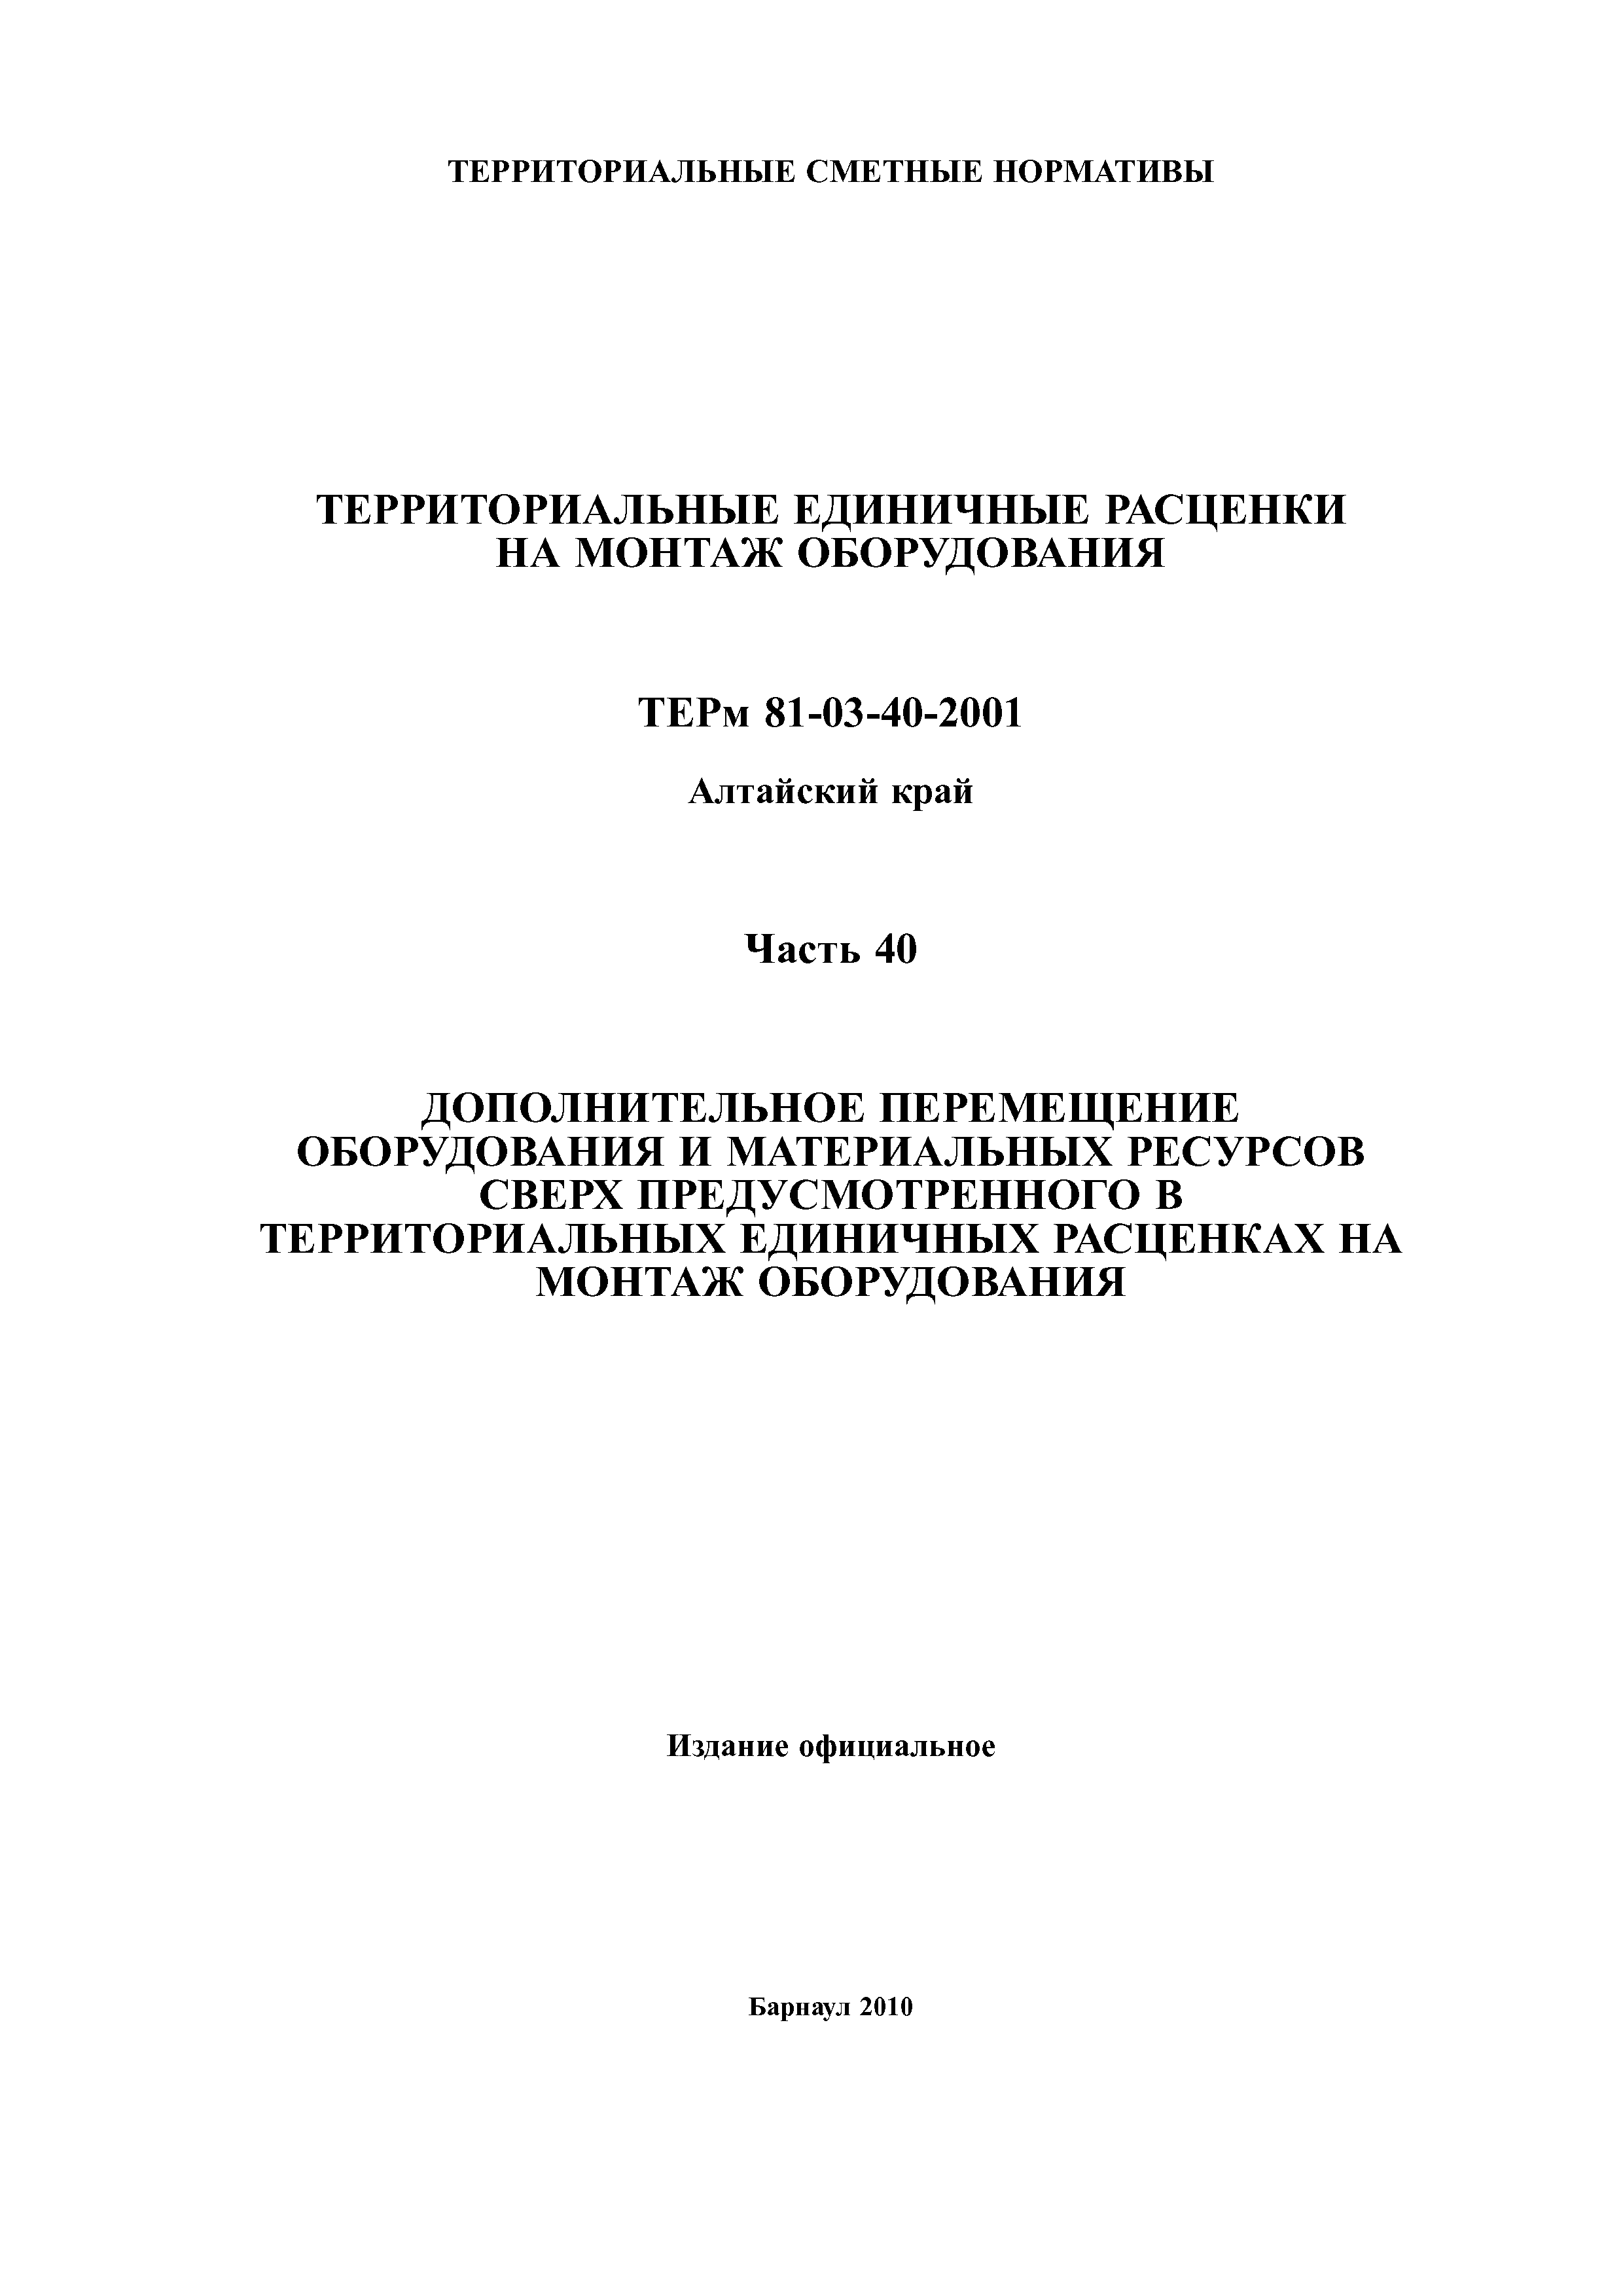 ТЕРм Алтайский край 81-03-40-2001